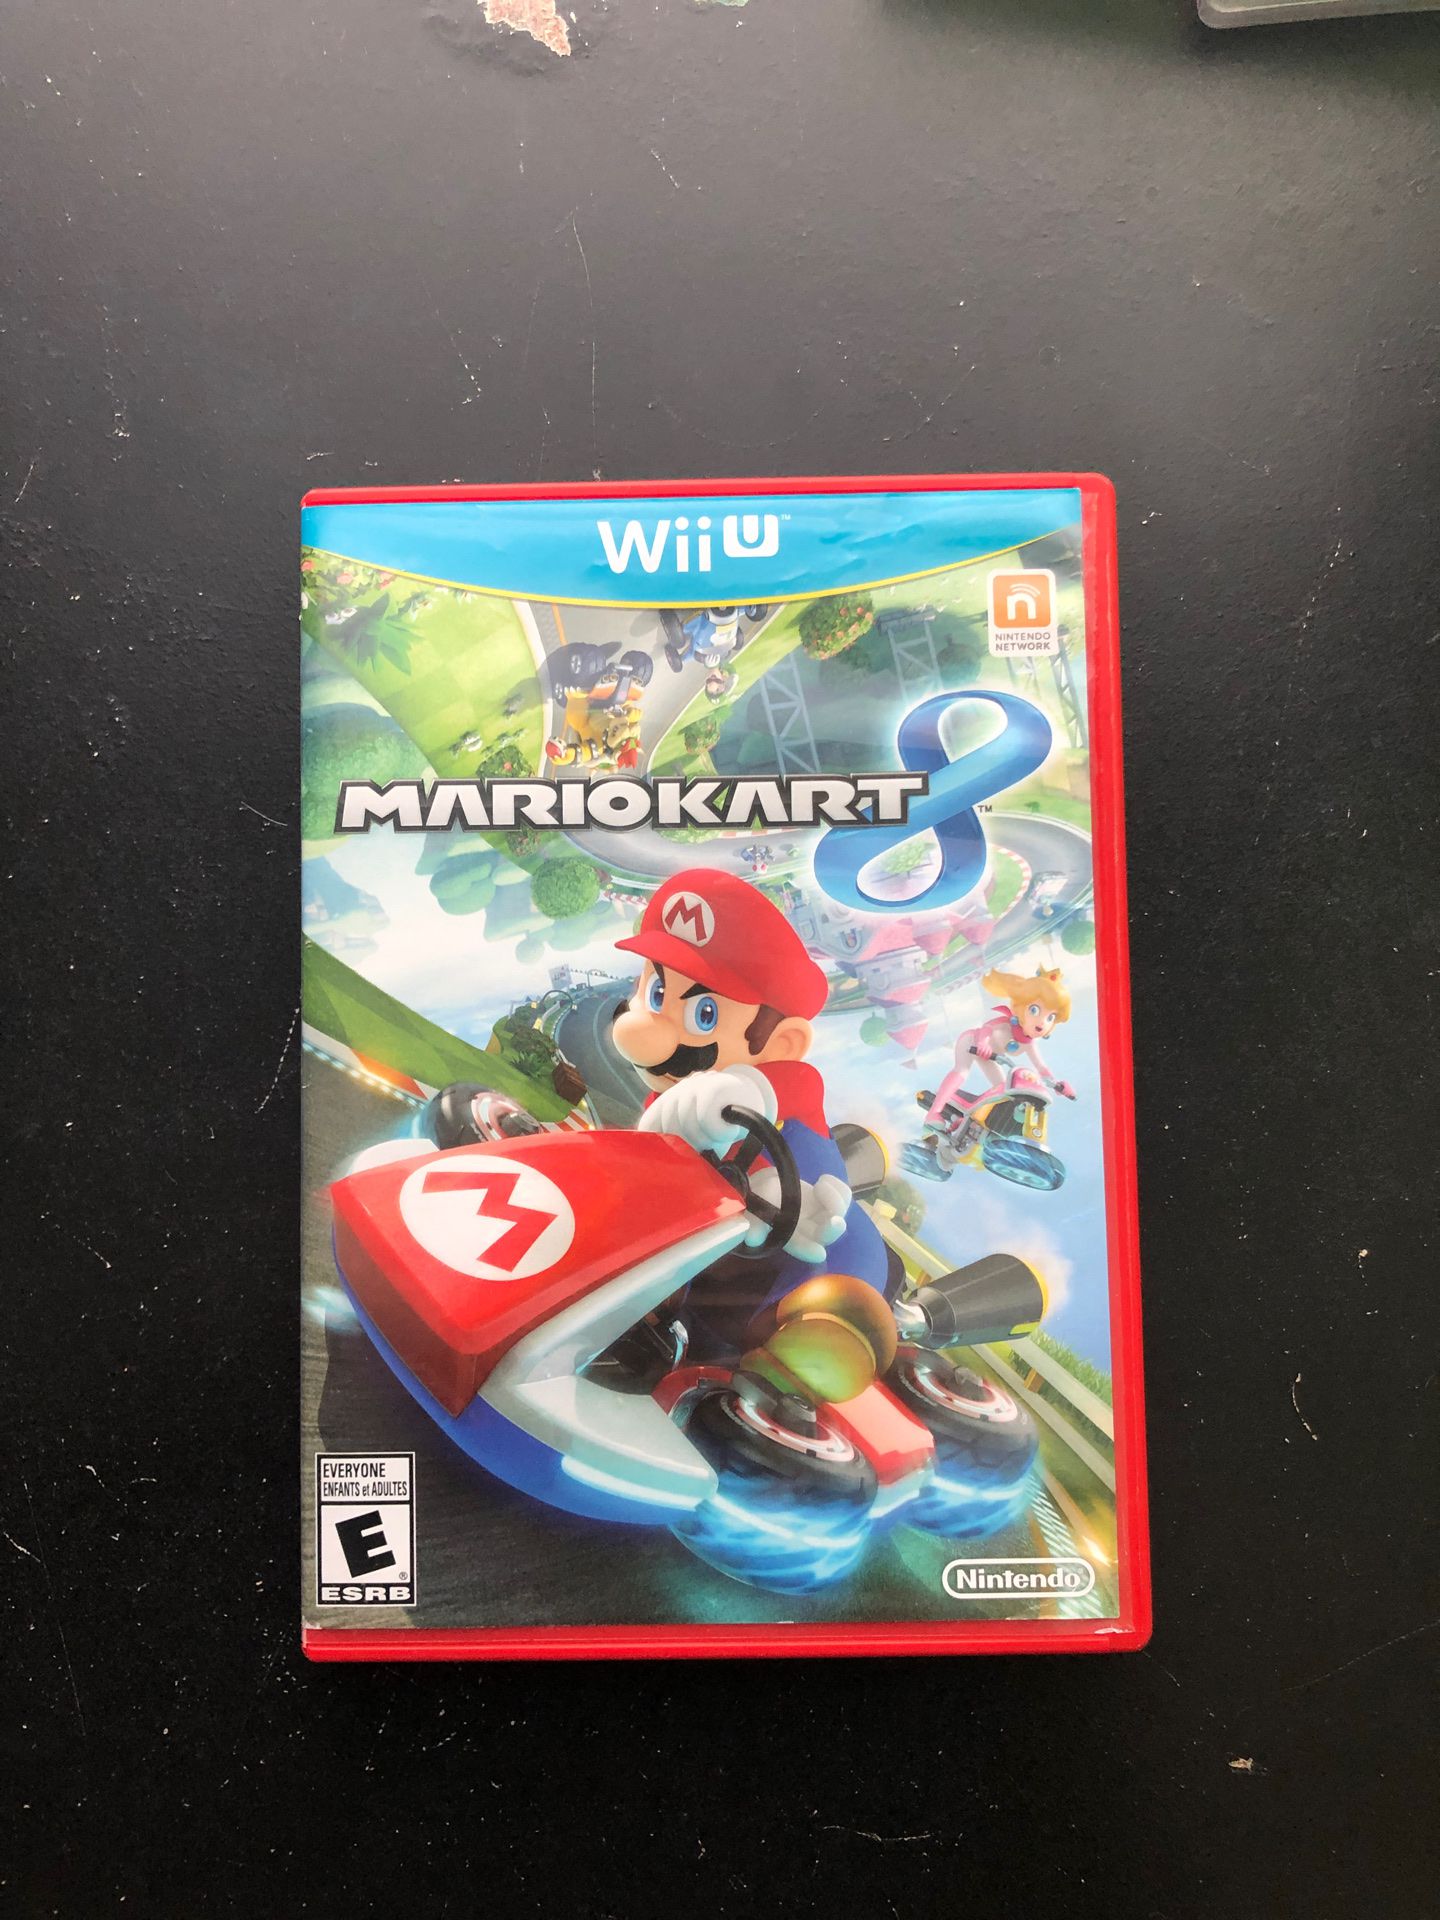 Mario kart 8 for Wii U (Brand New)